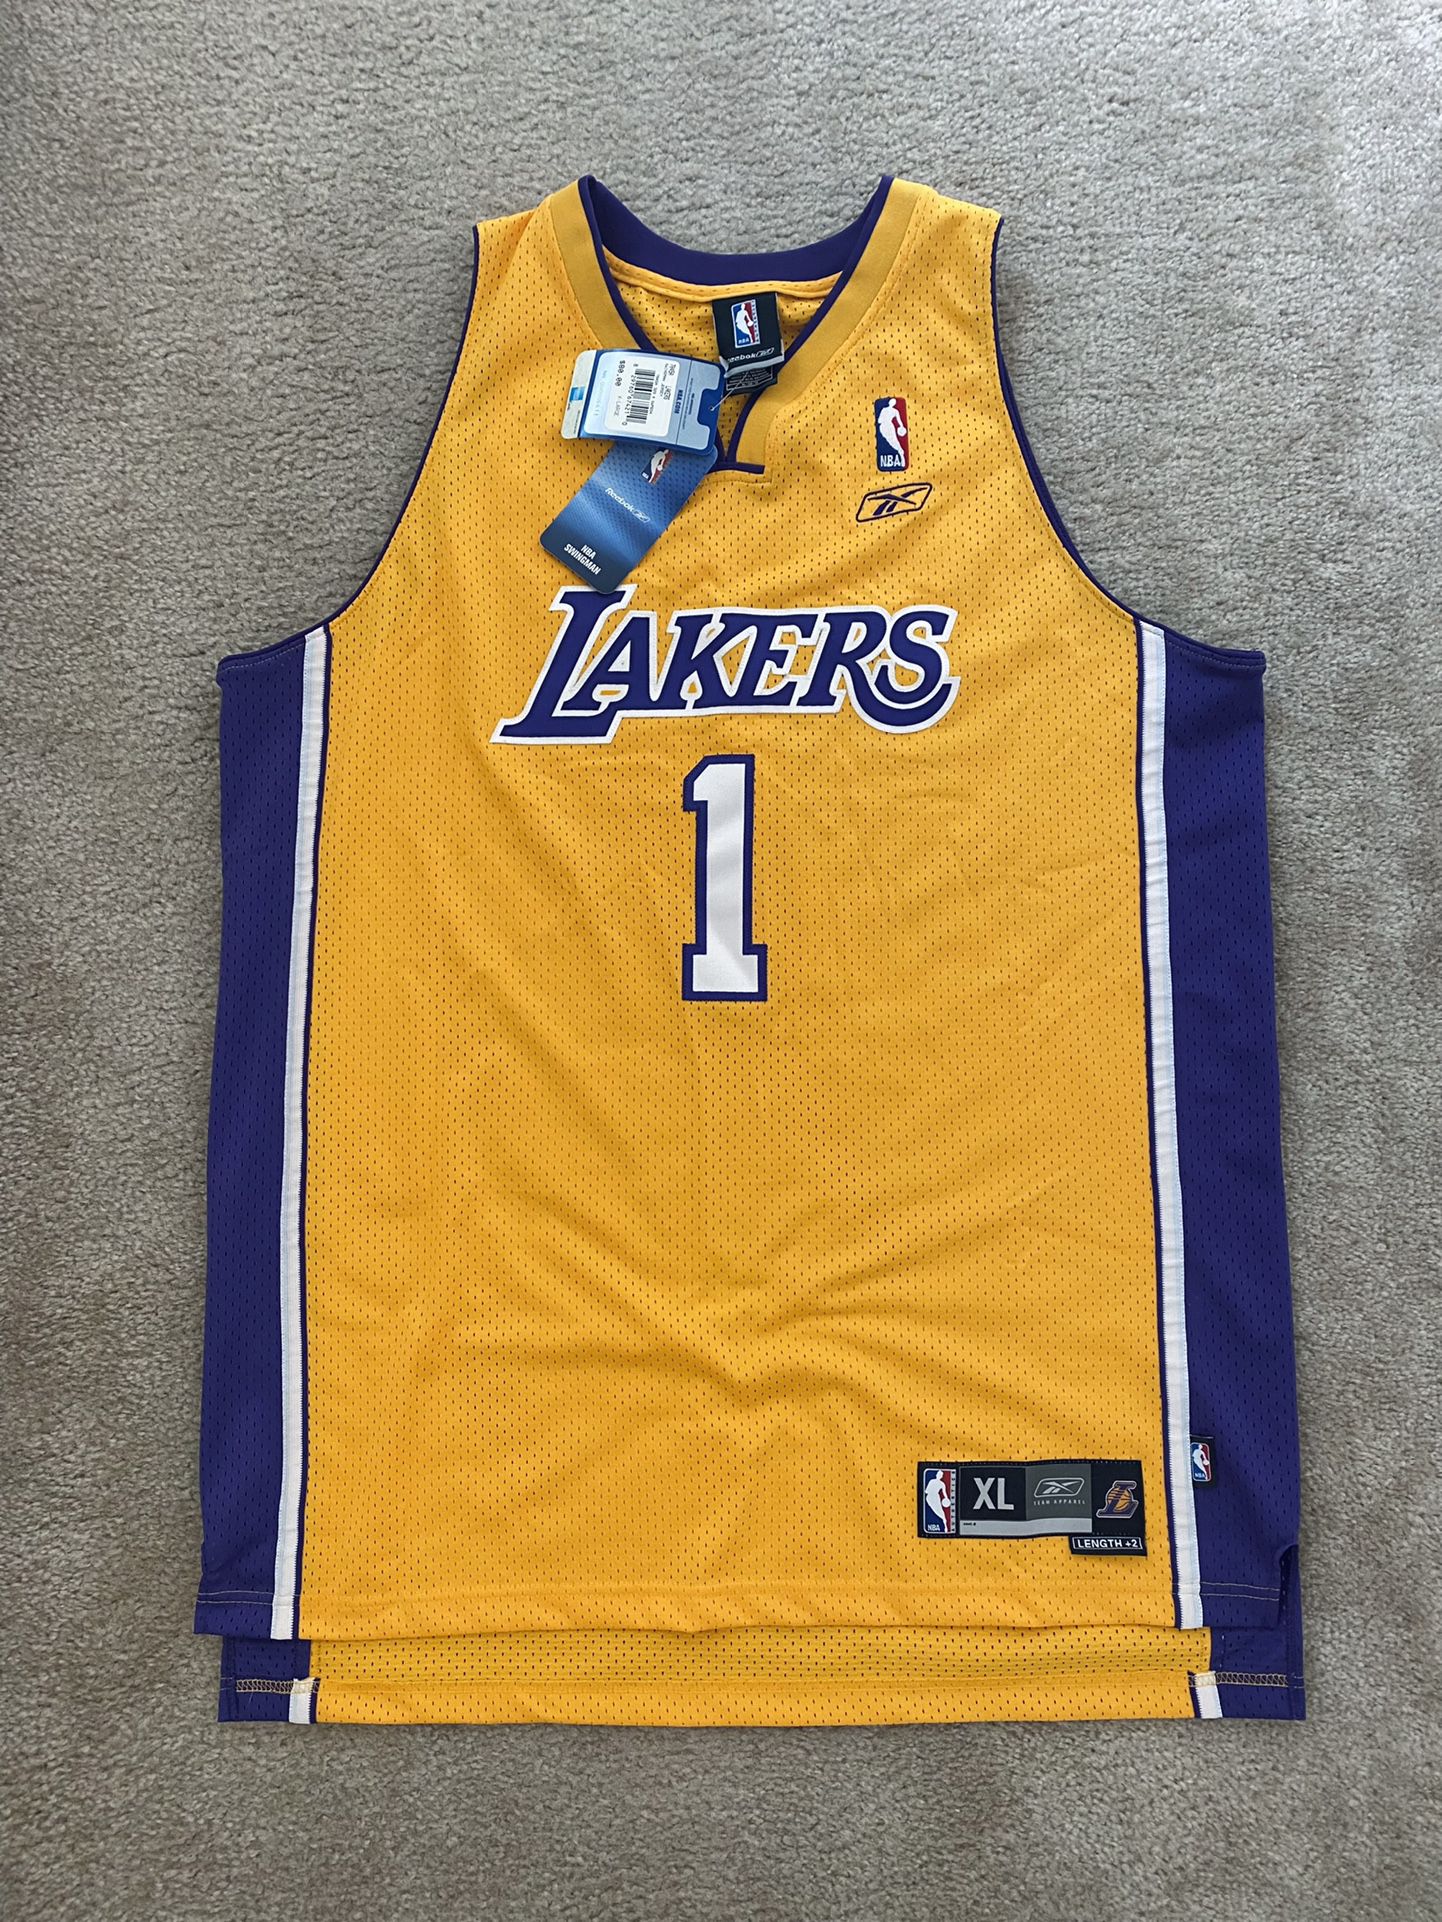 Caron Butler - Reebok Lakers Brand New Swingman Jersey Size XL